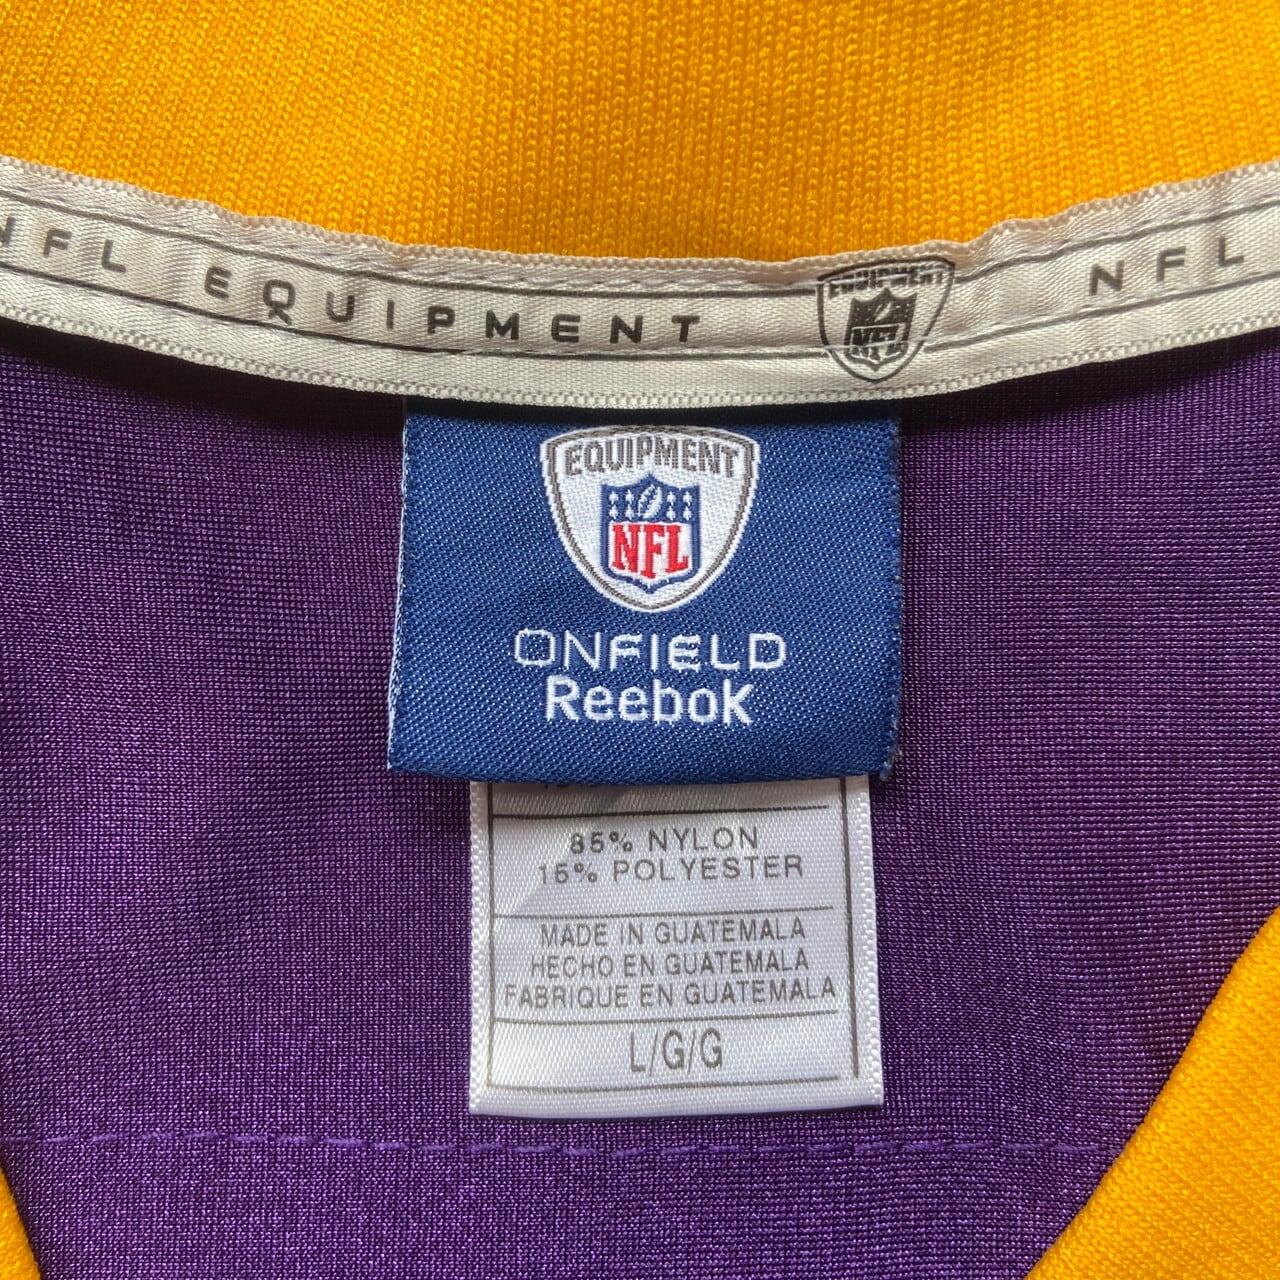 NFL バイキングス ナイロンジャケット 紫 パープル L リーボック